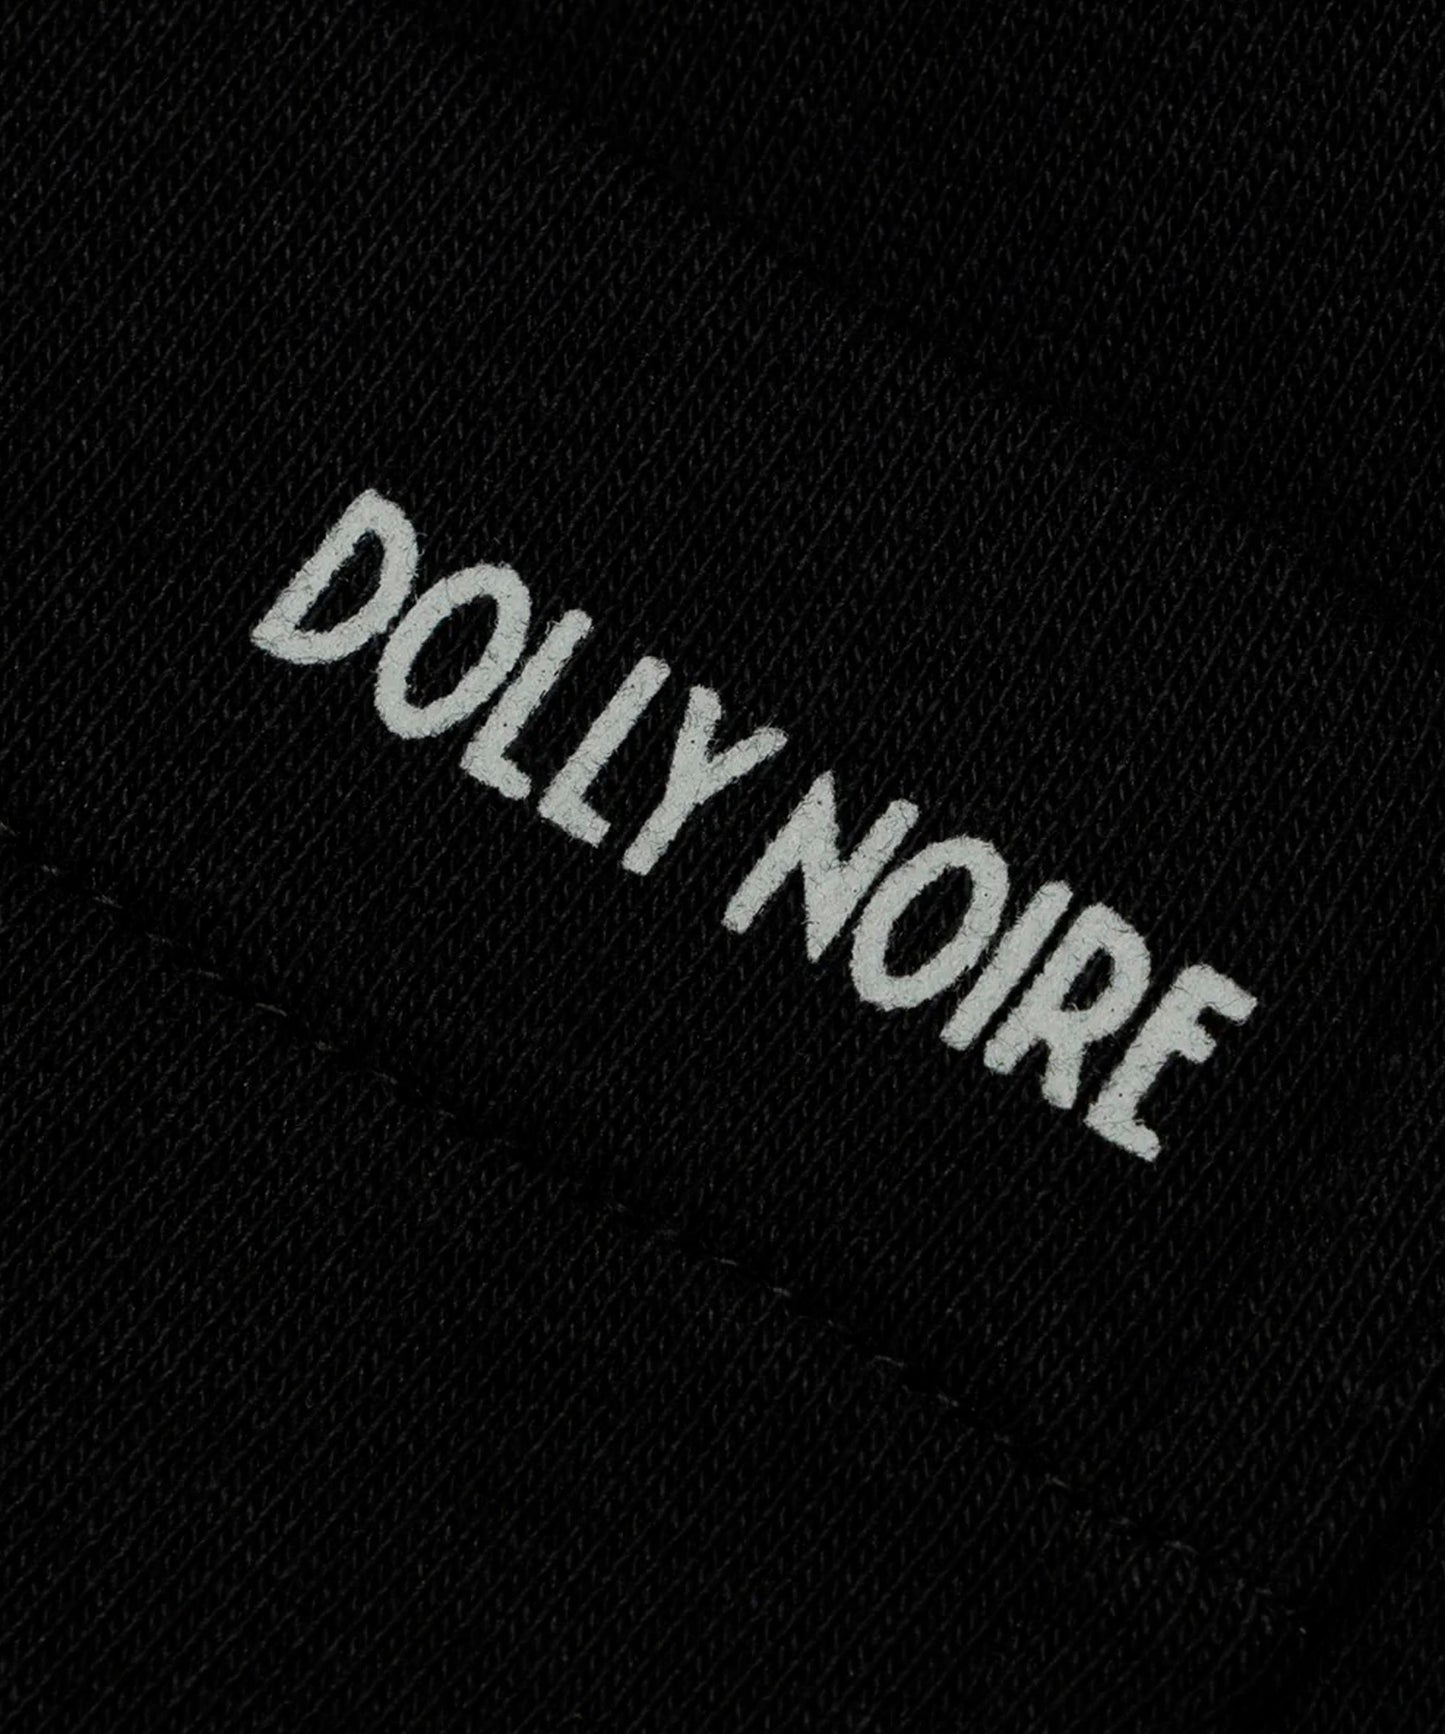 dolly-noire-pantalon-chandal-logo-label-color-negro-corto-logo-dolly-noire-en-la-pierna-marca-italiana.